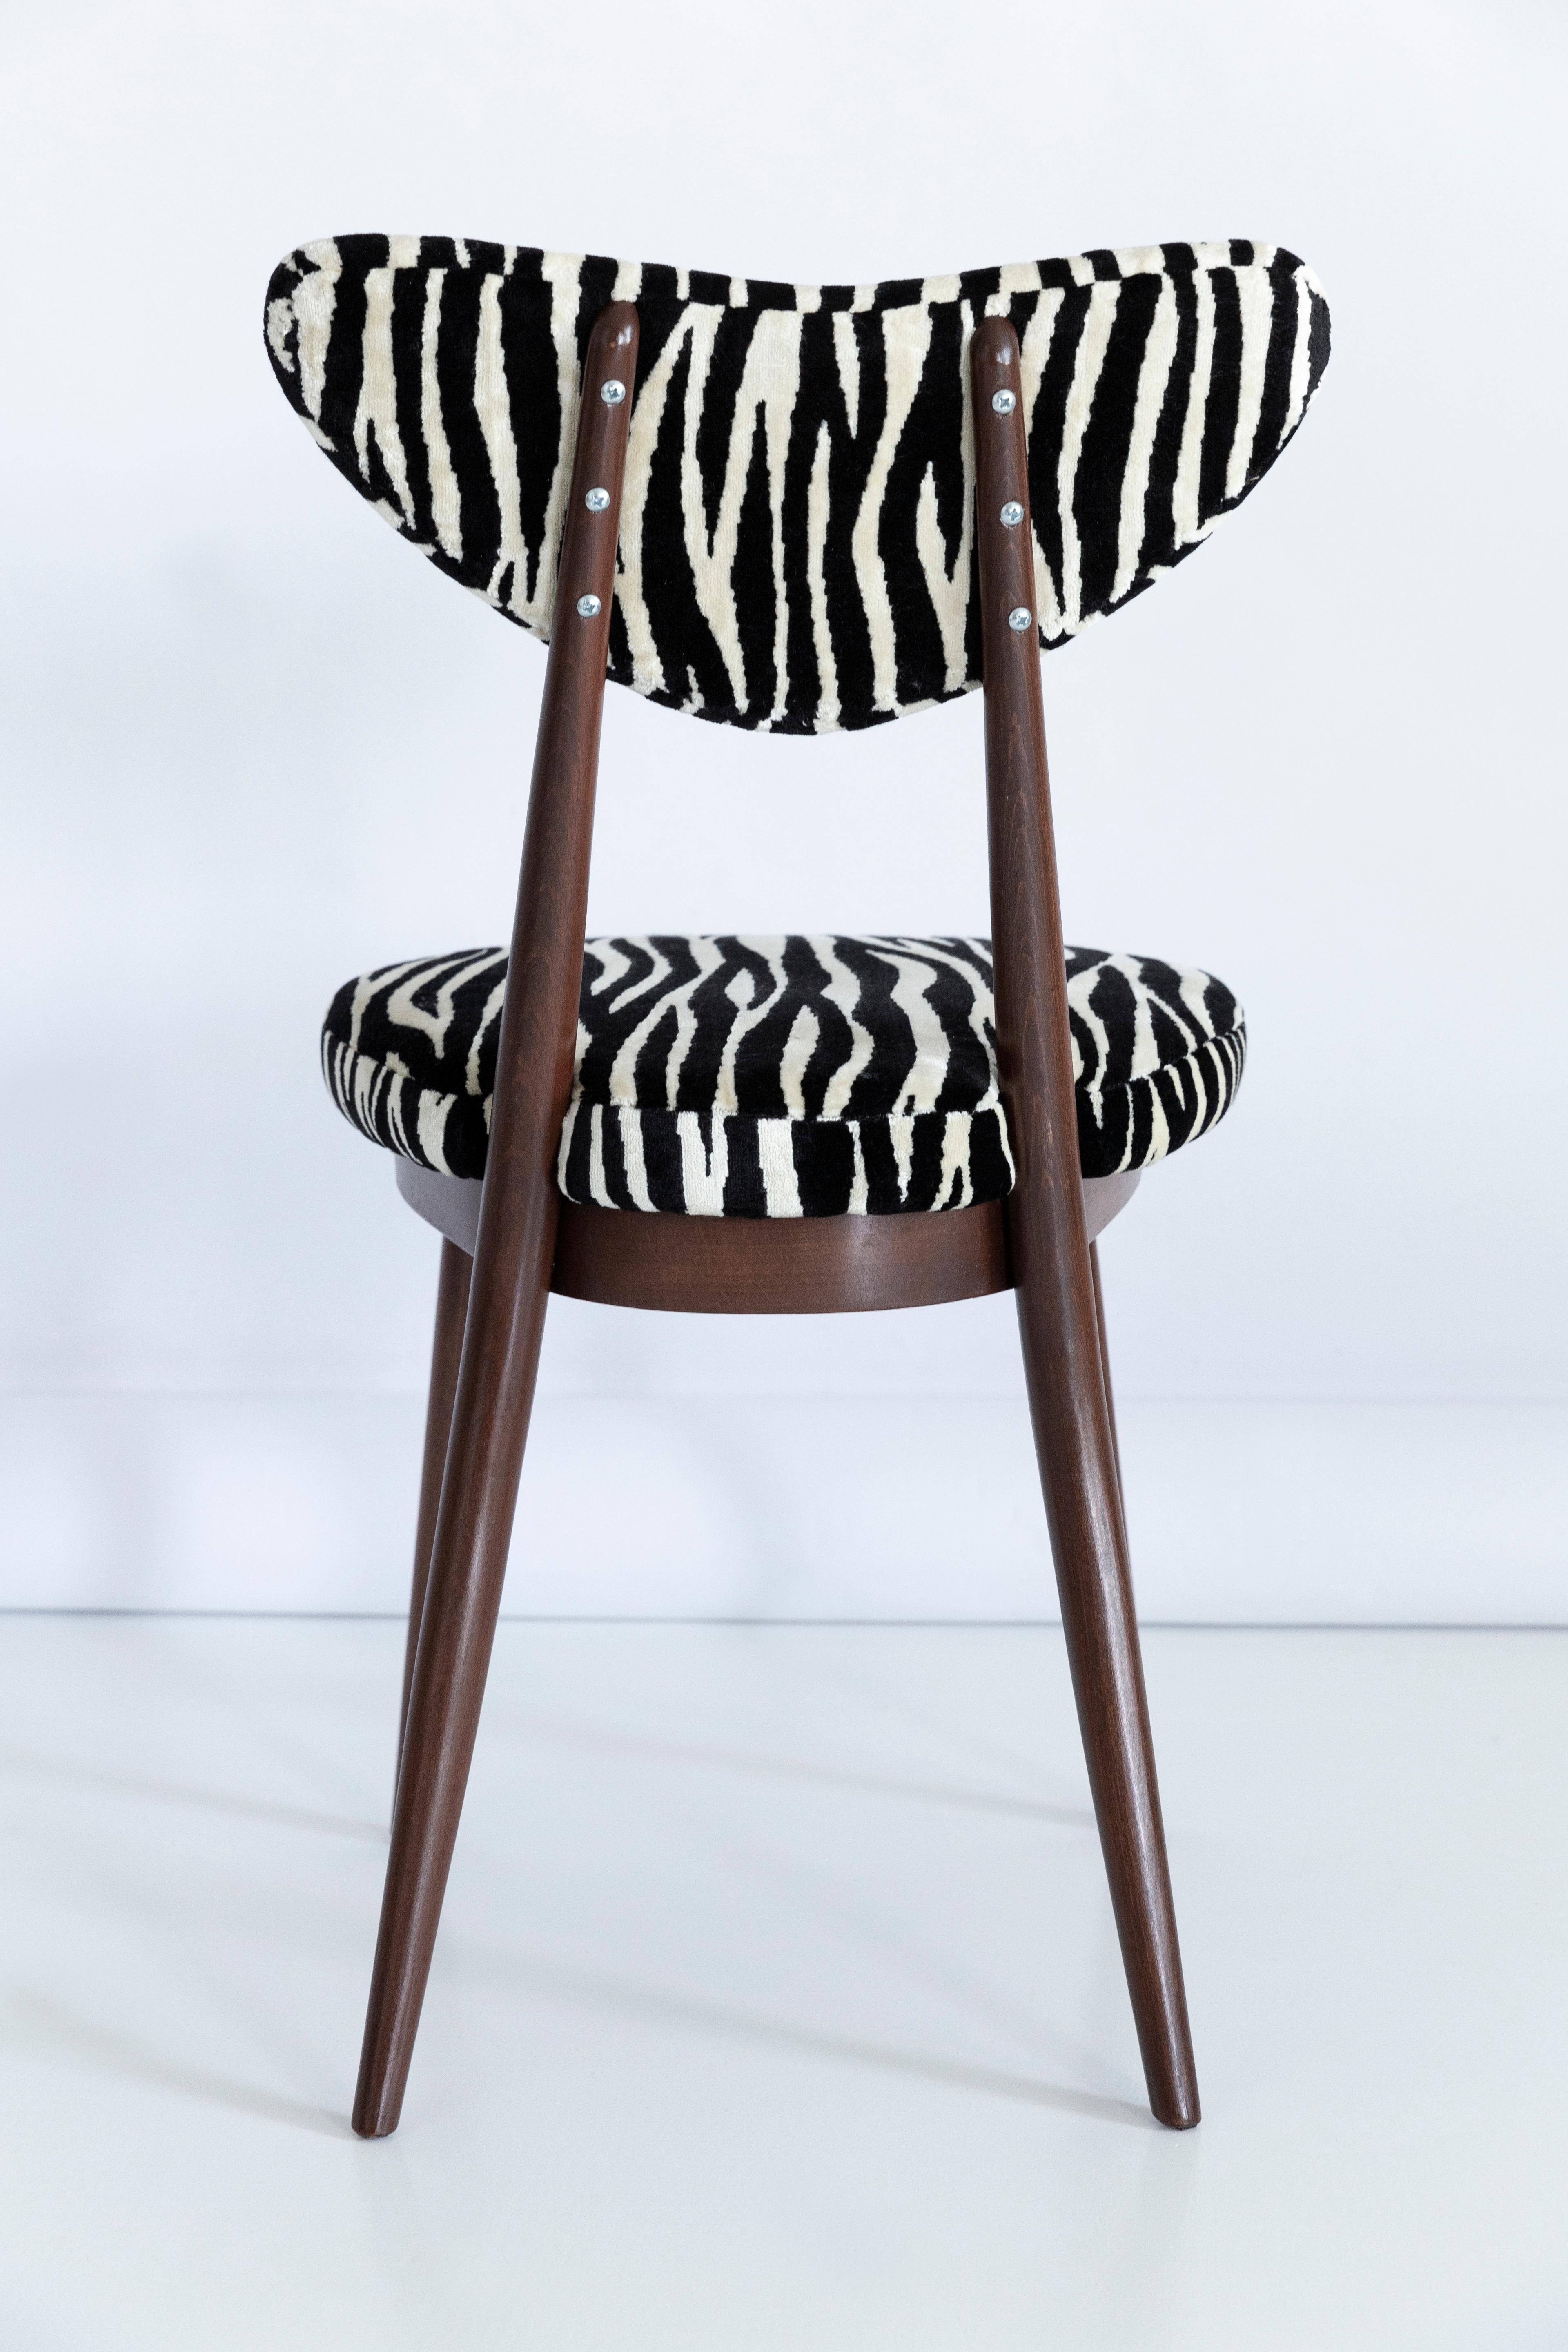 Set Midcentury Zebra Black White Heart Chairs, Hollywood Regency, Poland, 1960s For Sale 3